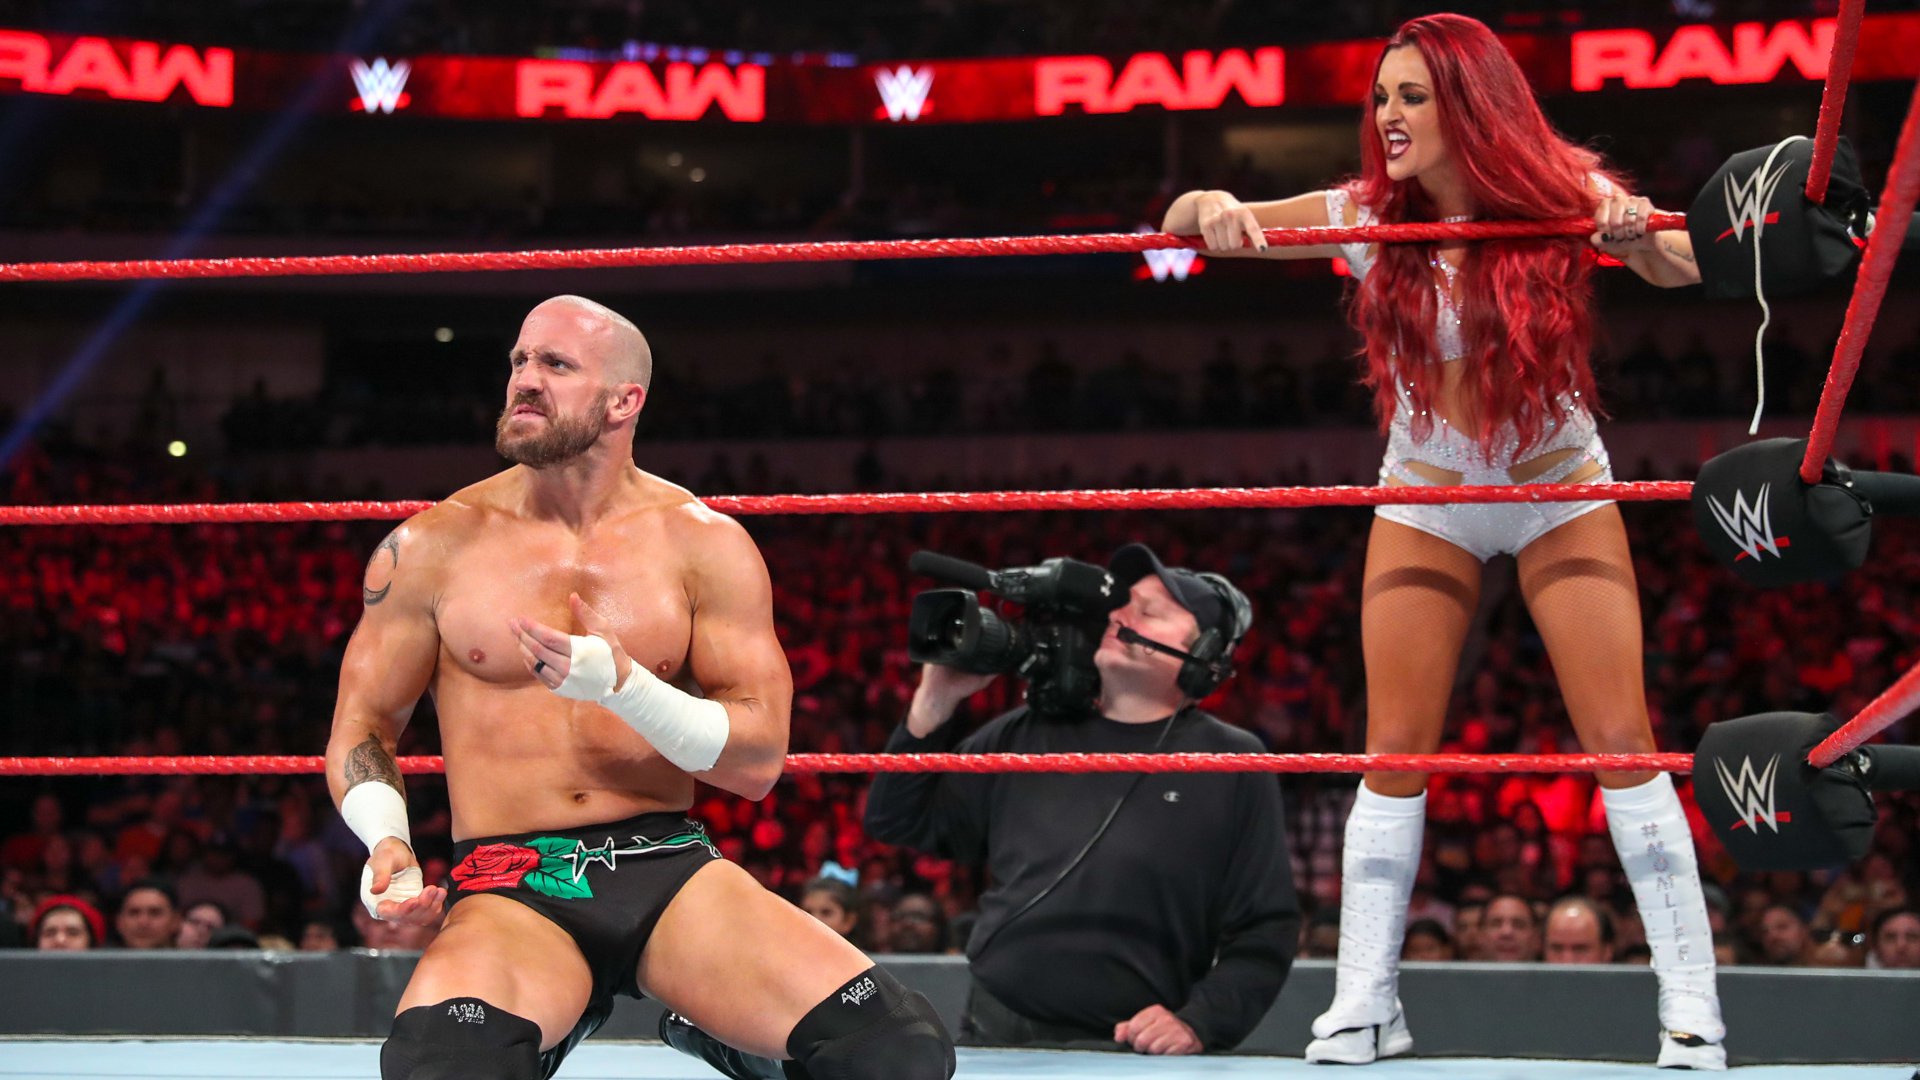 Universal Champion Seth Rollins & Raw Women’s Champion Becky Lynch def. Mike Kanellis & Maria Kanellis